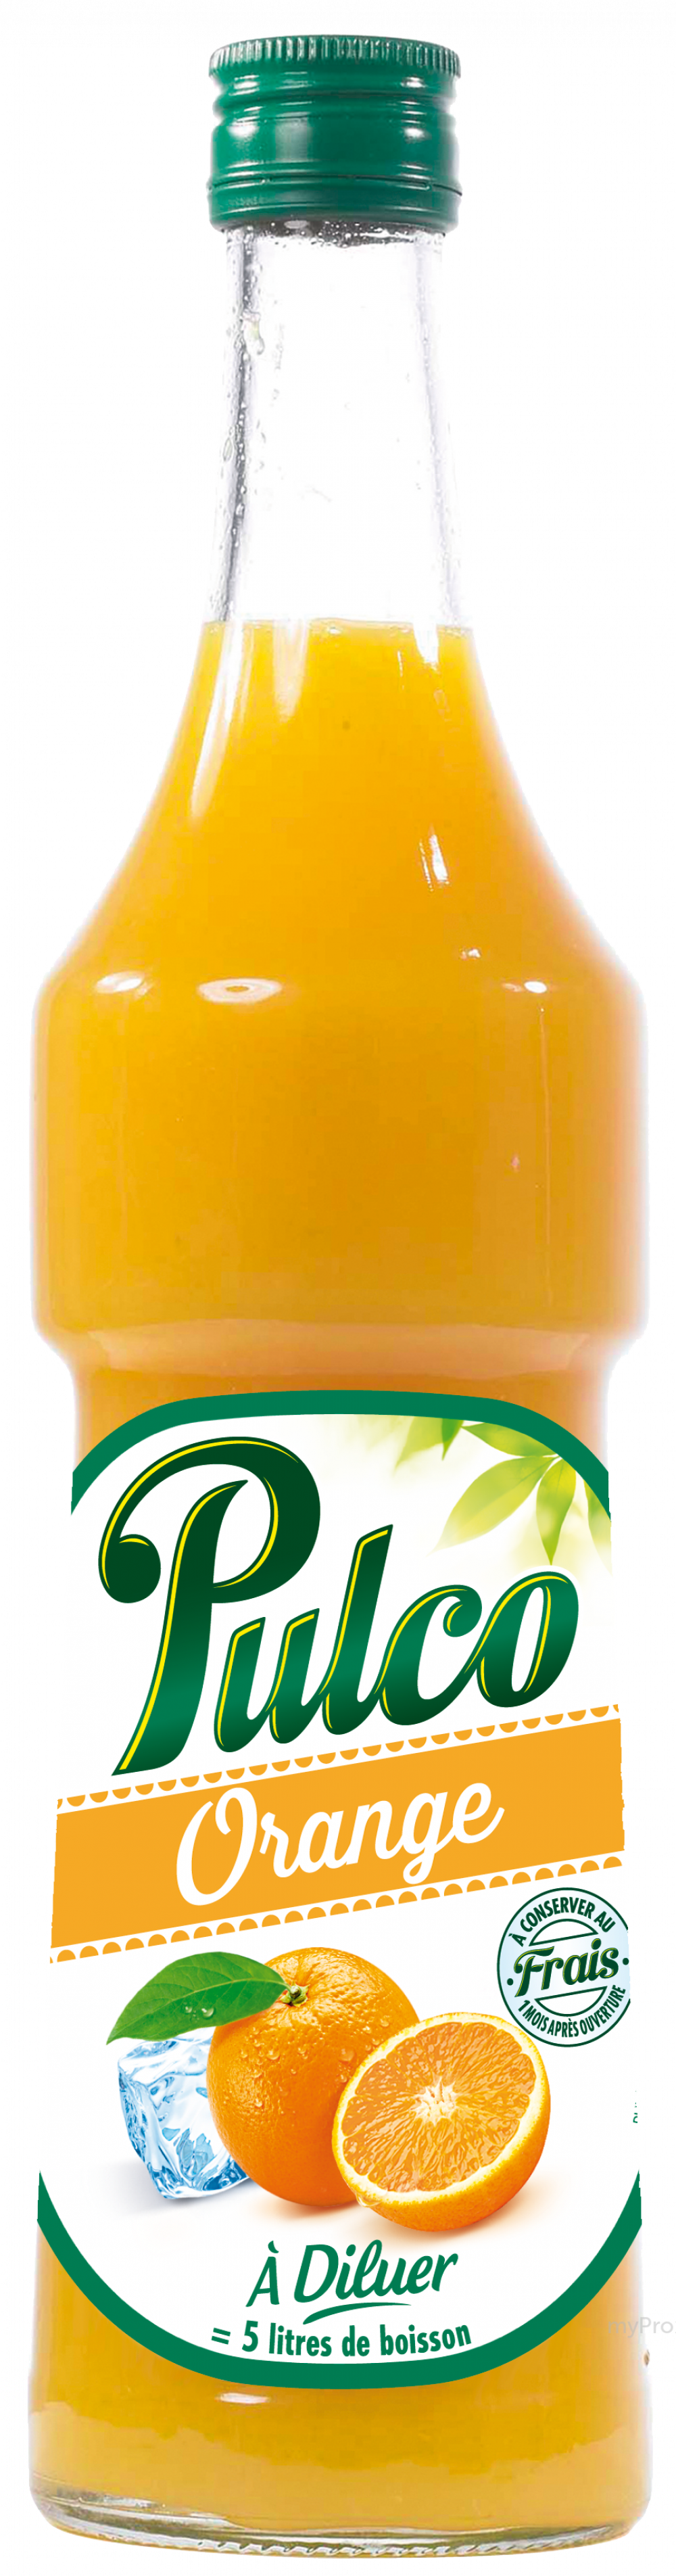 Pulco Pulco orange citron 